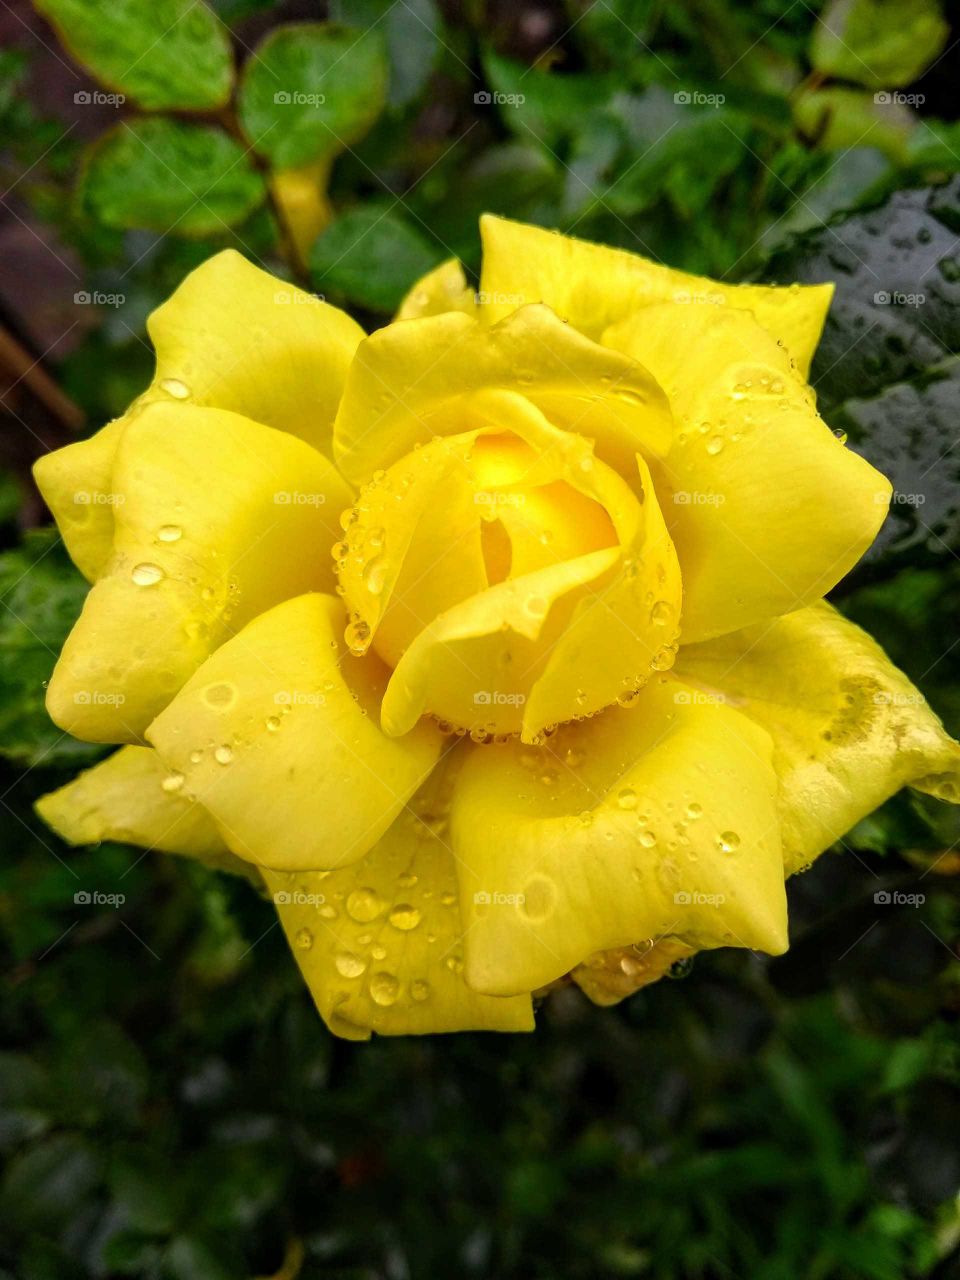 Rosa amarela orvalhada pela chuva!